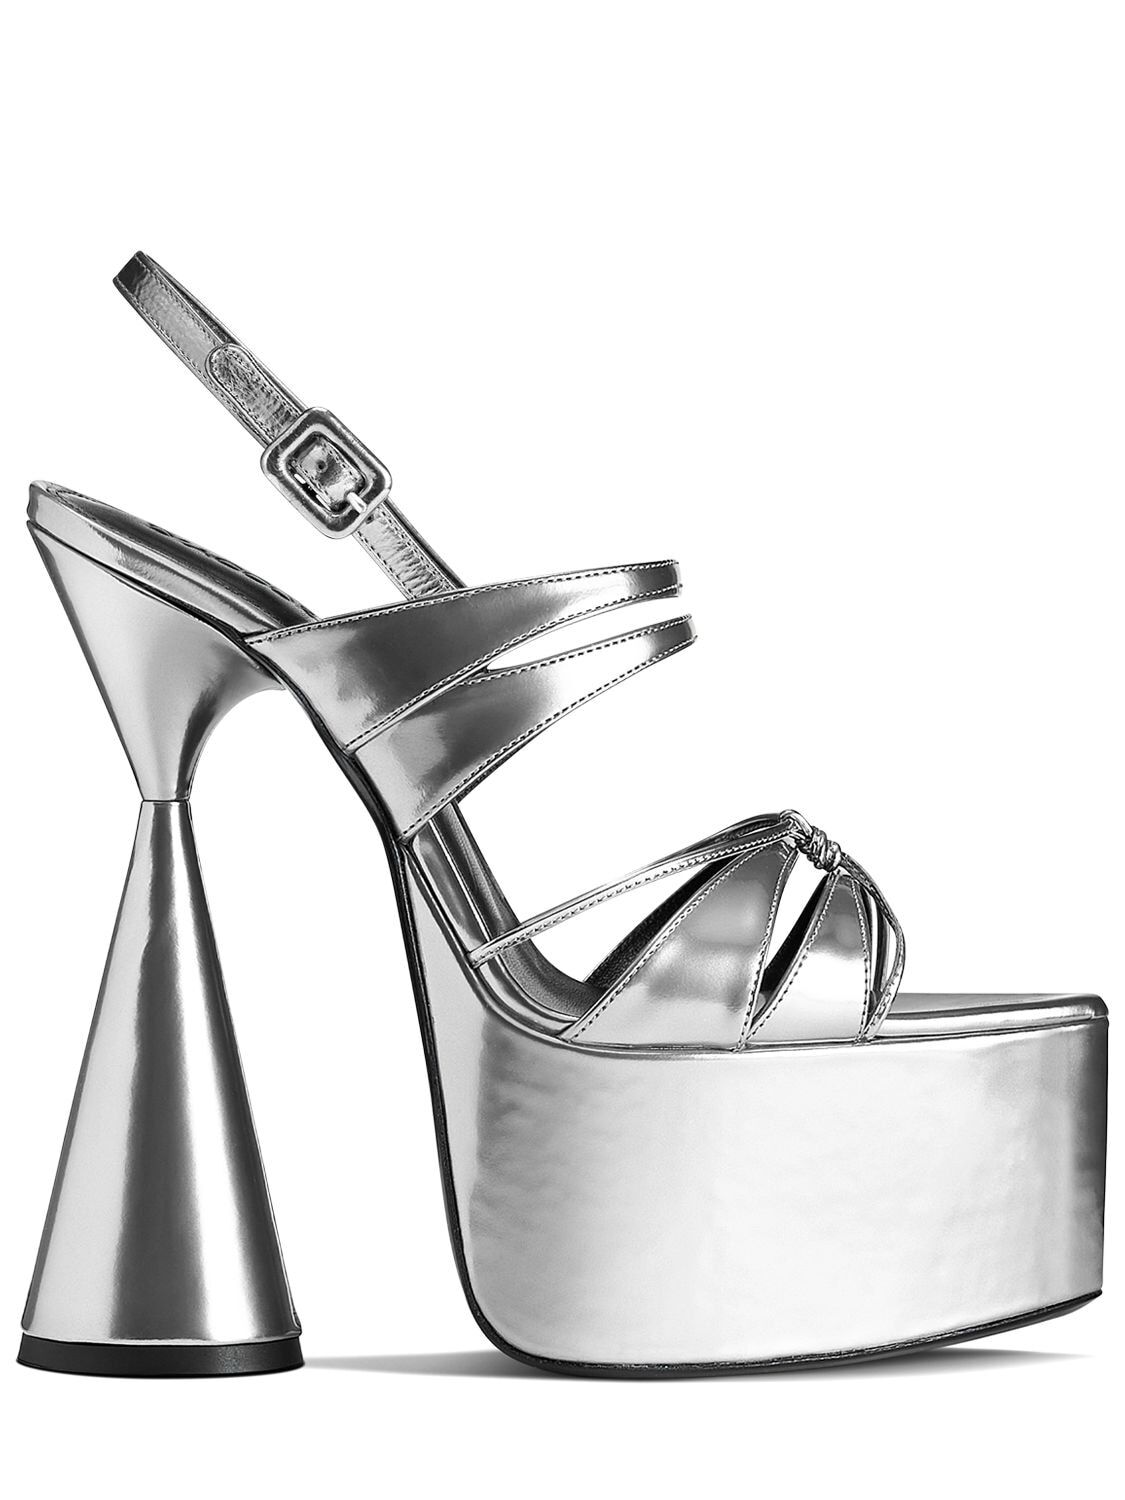 D'ACCORI 150mm Belle Metallic Leather Sandals in silver